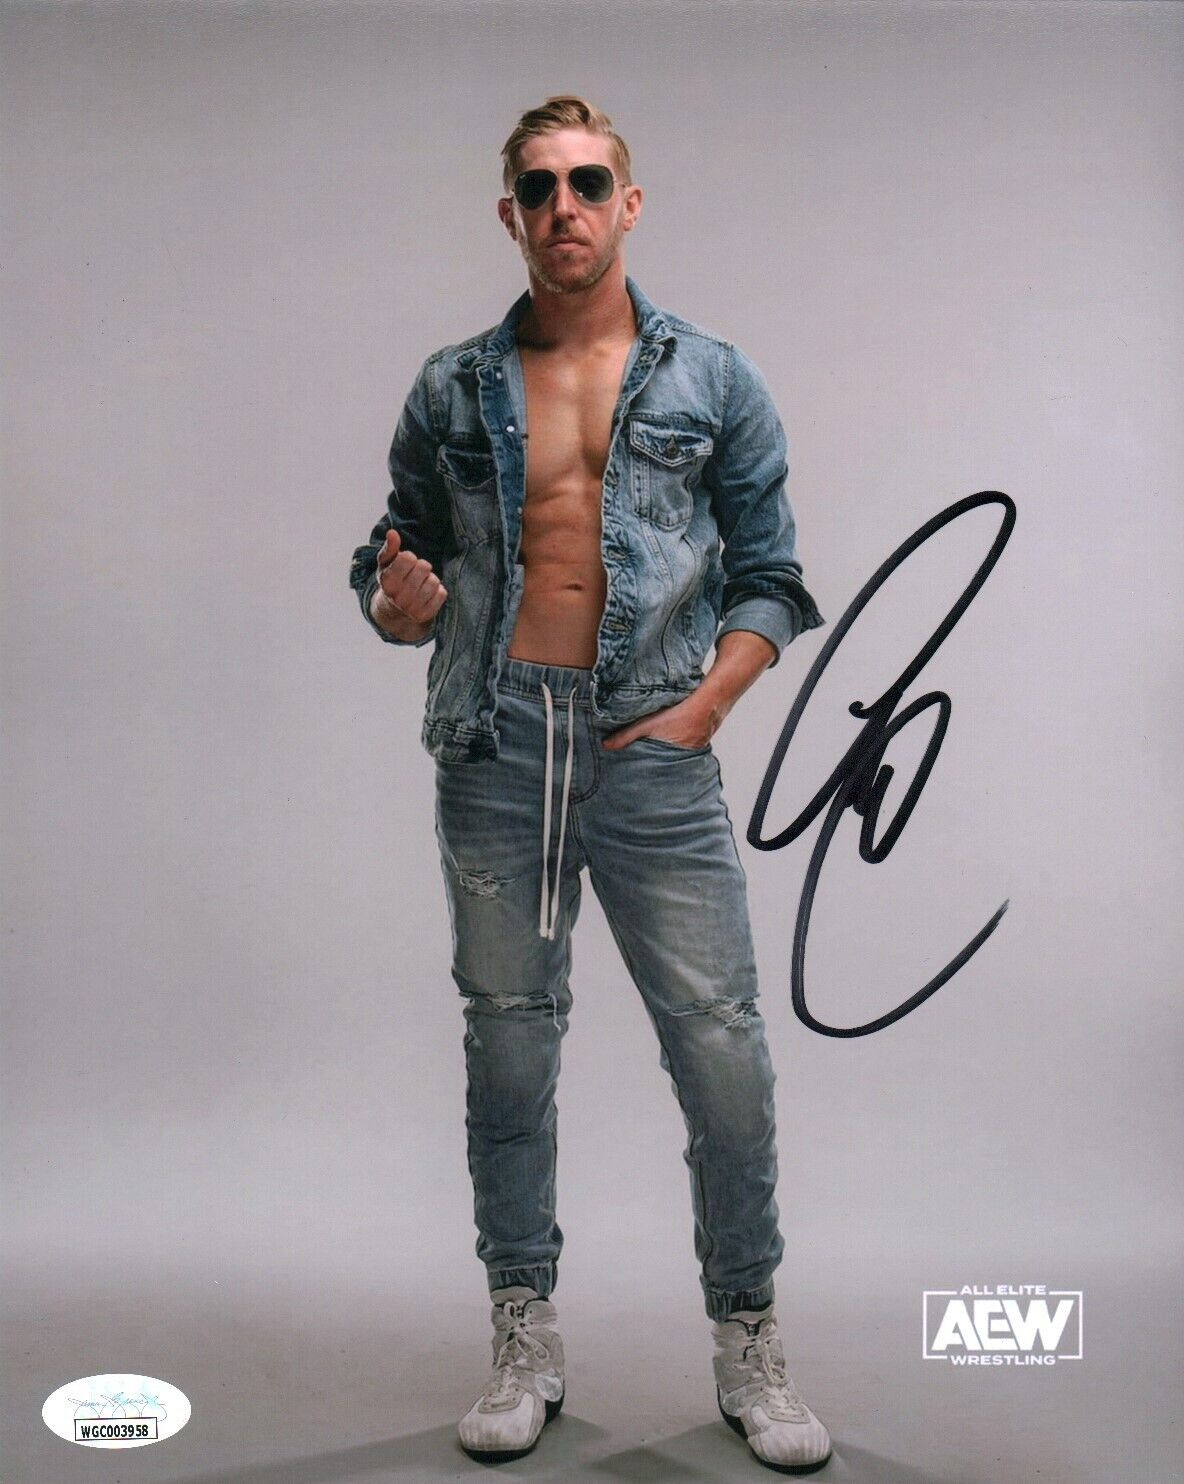 Orange Cassidy AEW Wrestling 8x10 Signed Photo JSA Certified Autograph